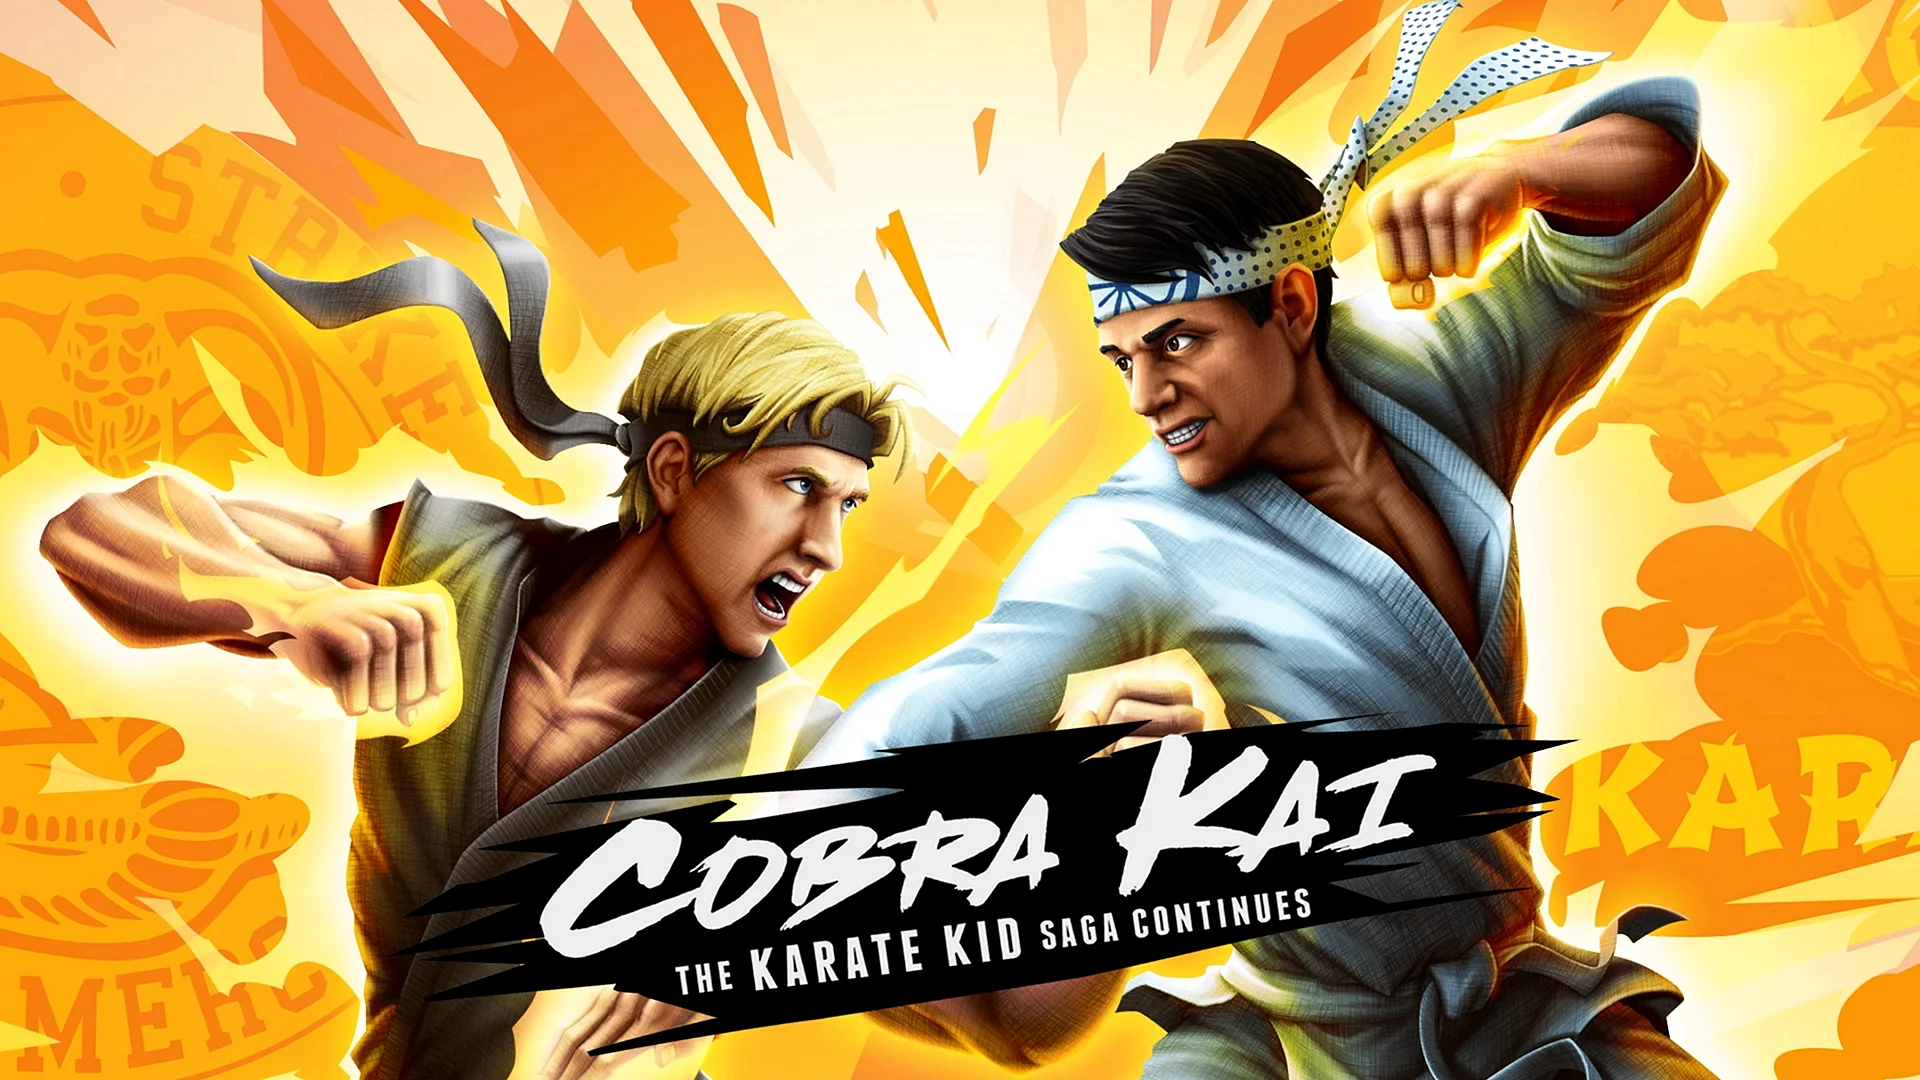 Cobra Kai The Karate Kid Saga Continues Wallpaper